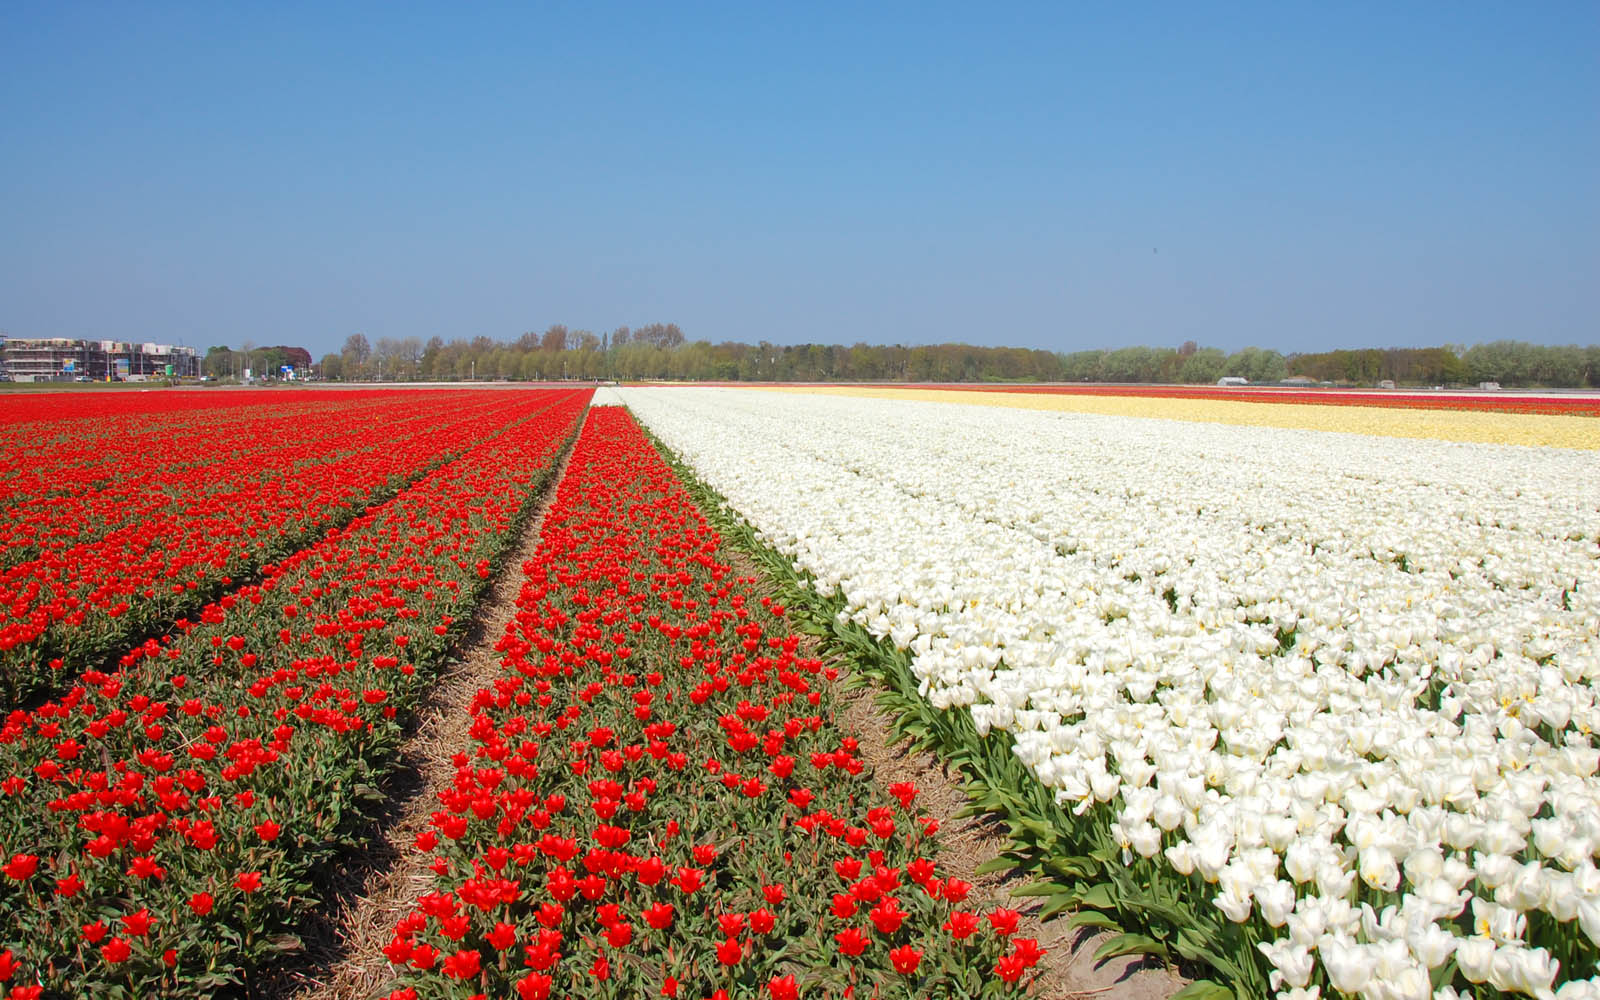 Tag Herlands Flower Fields Wallpaper Background Photos Image